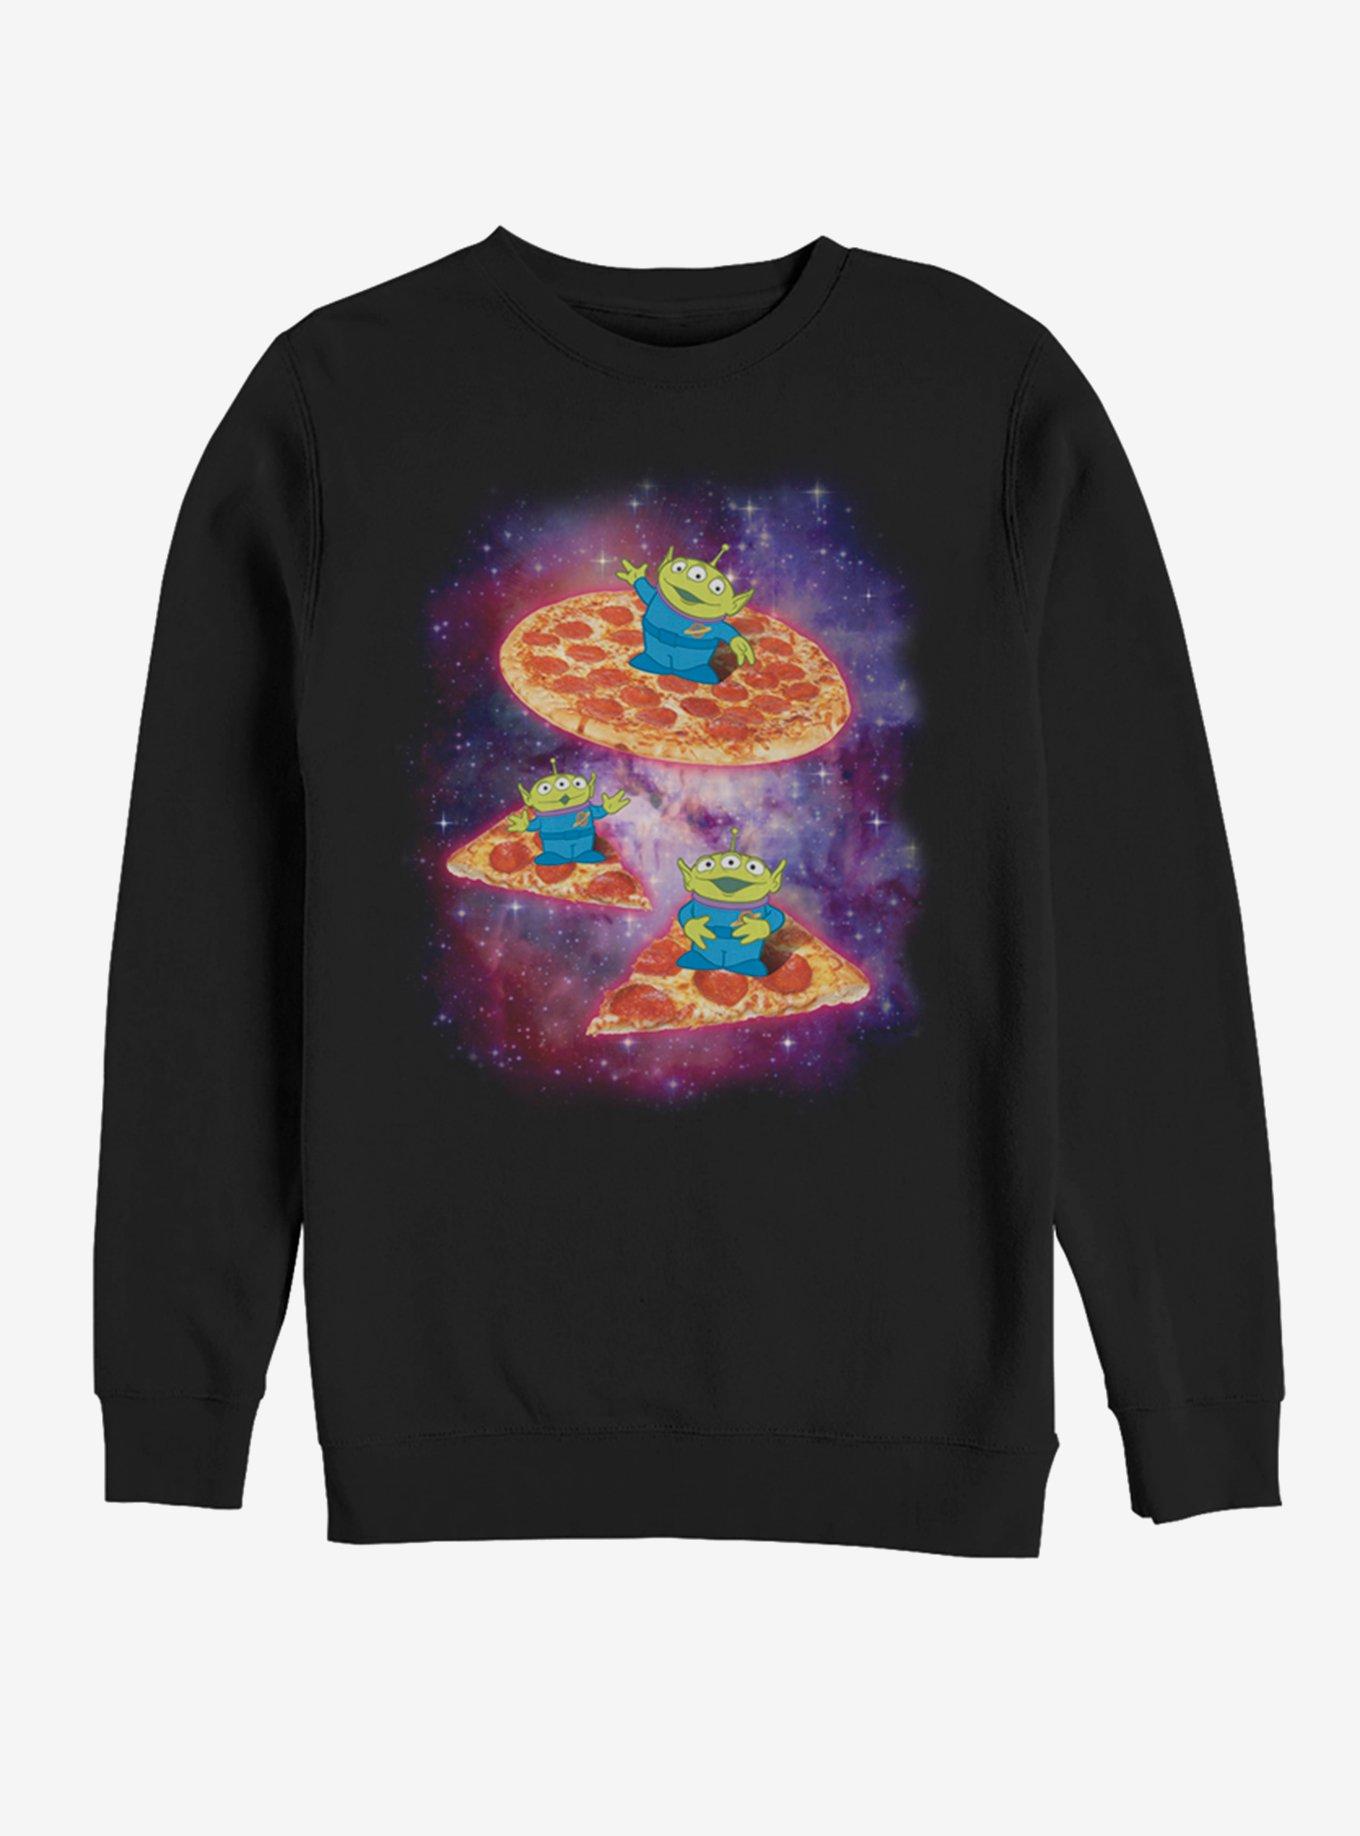 Disney Pixar Toy Story Pizza Saucer Sweatshirt